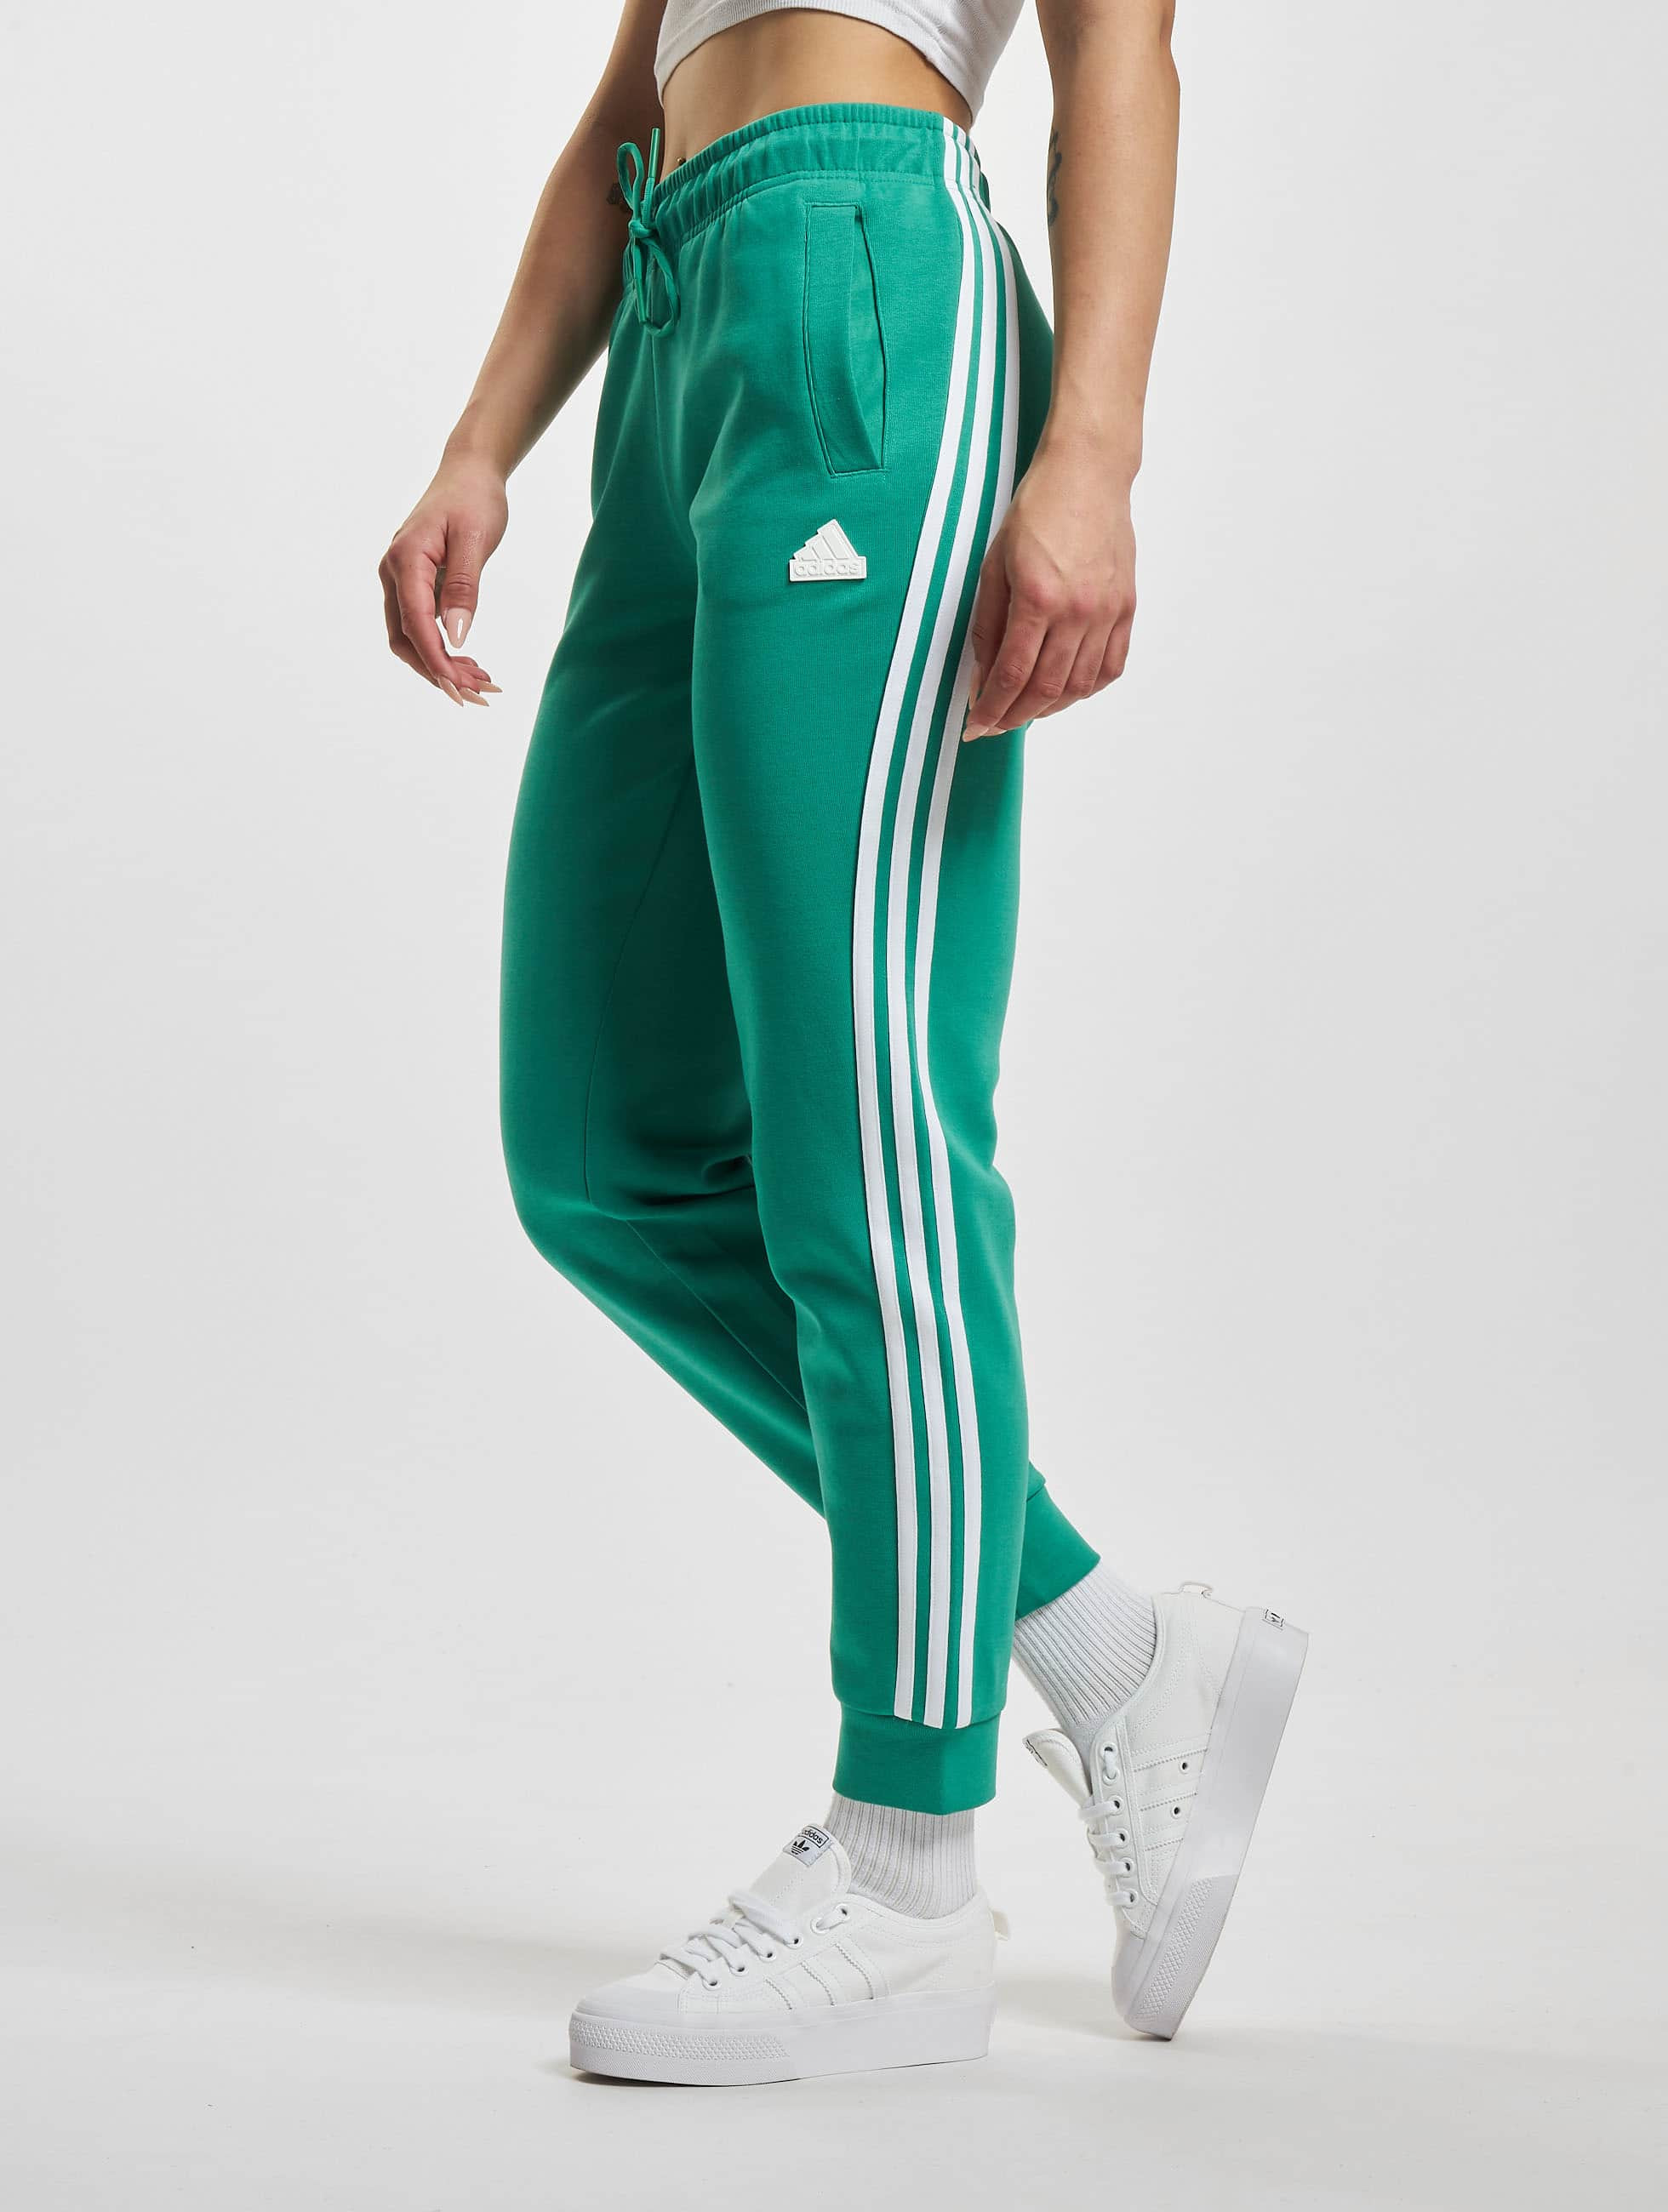 adidas Originals Damen Jogginghose 3 Stripes Regular in grün